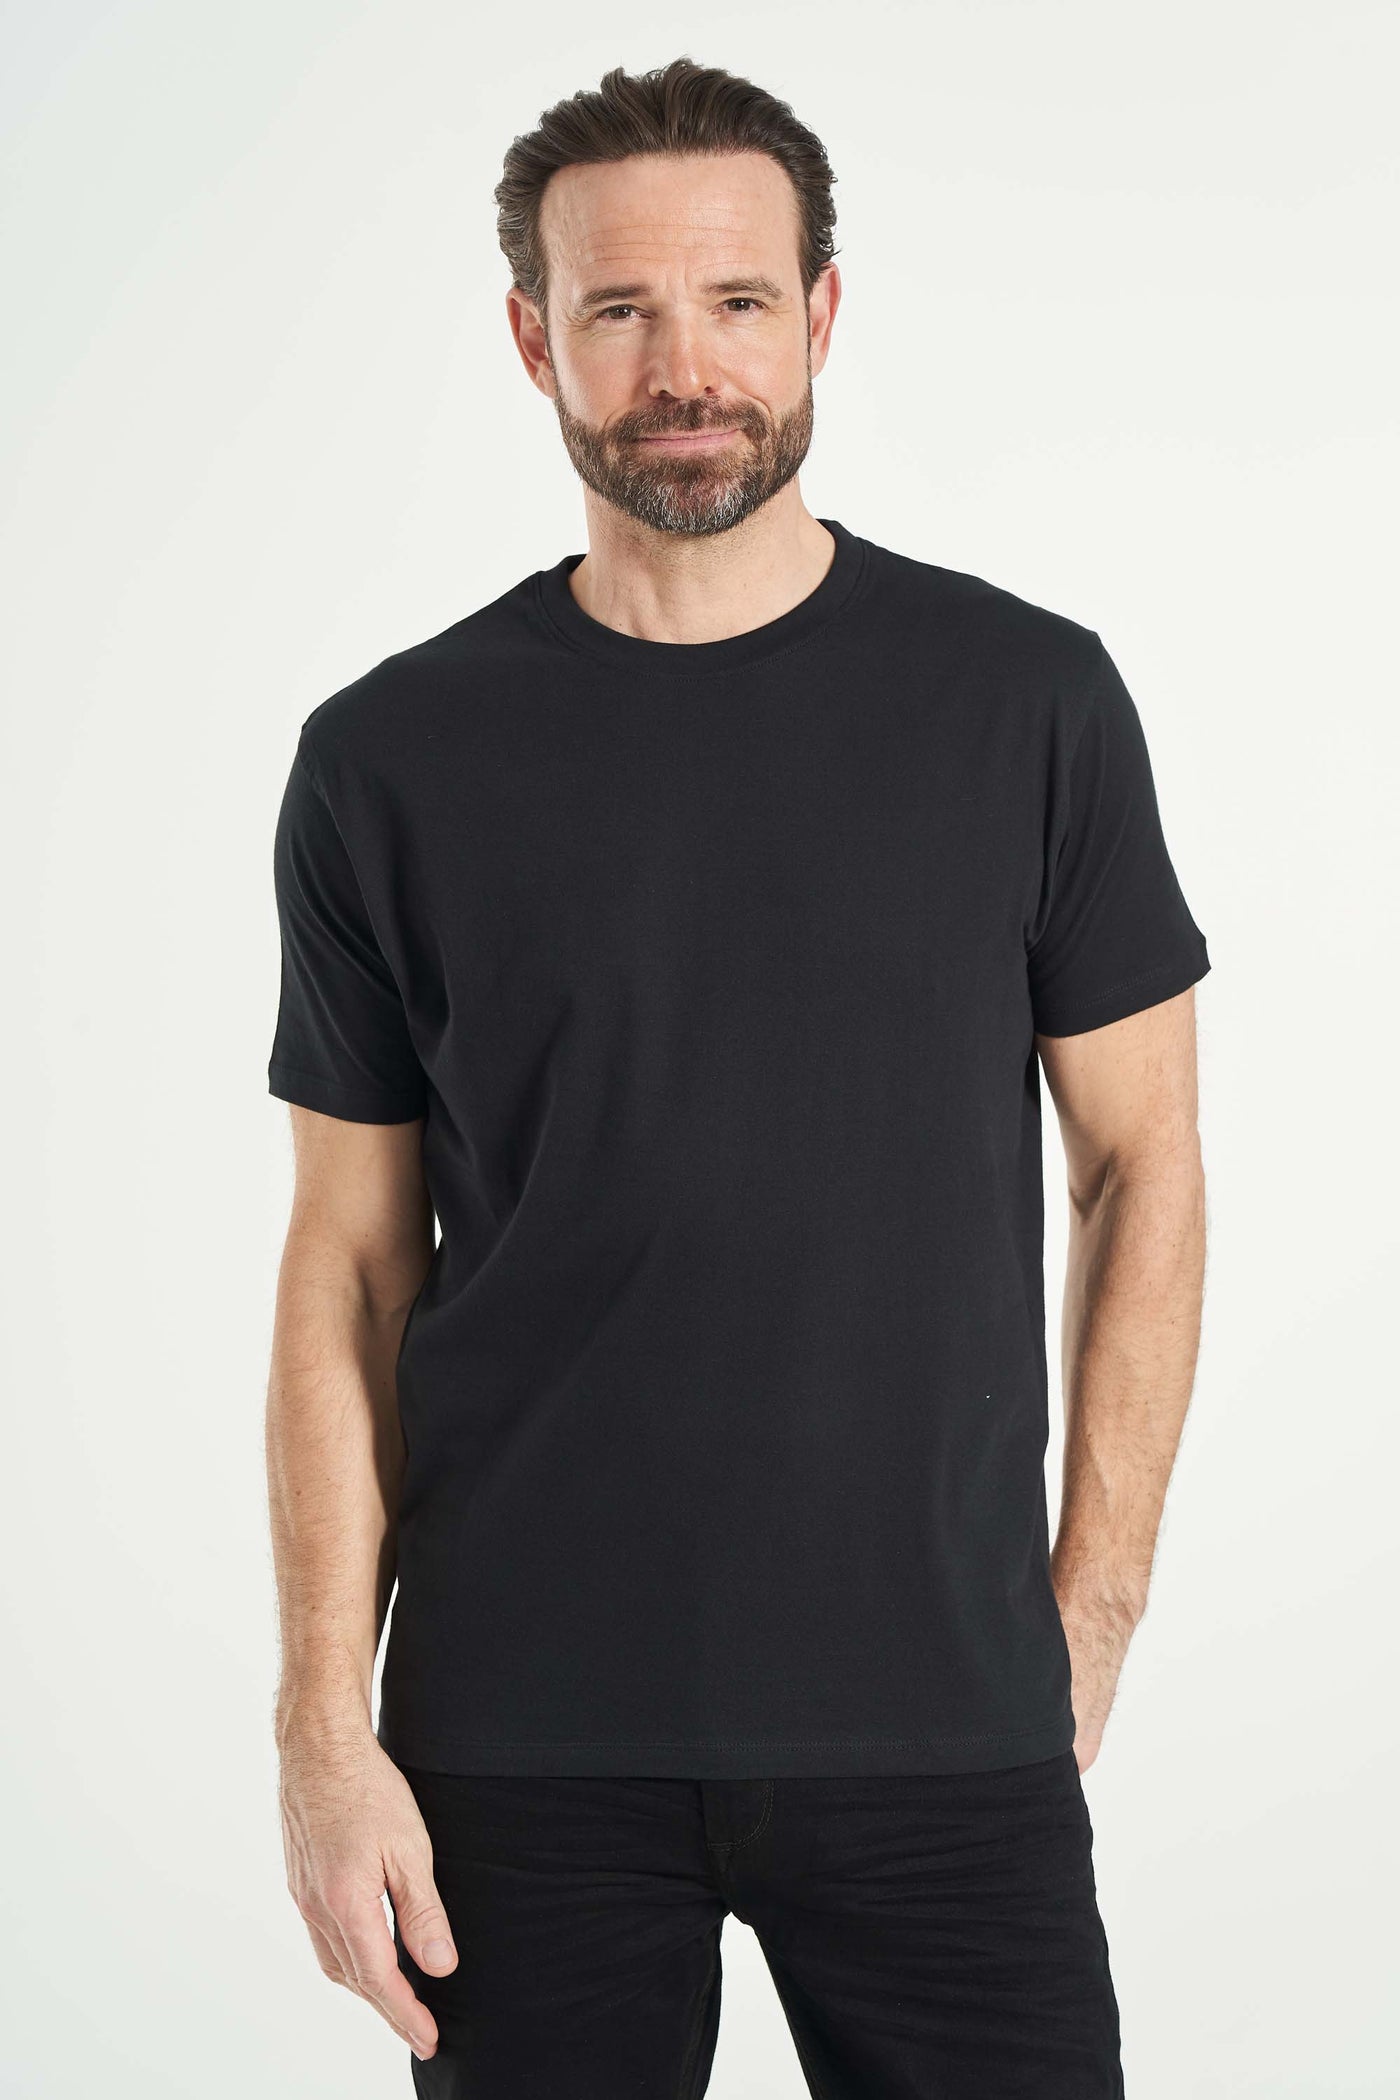 3 x T-Shirt 'Holstebro' - Black